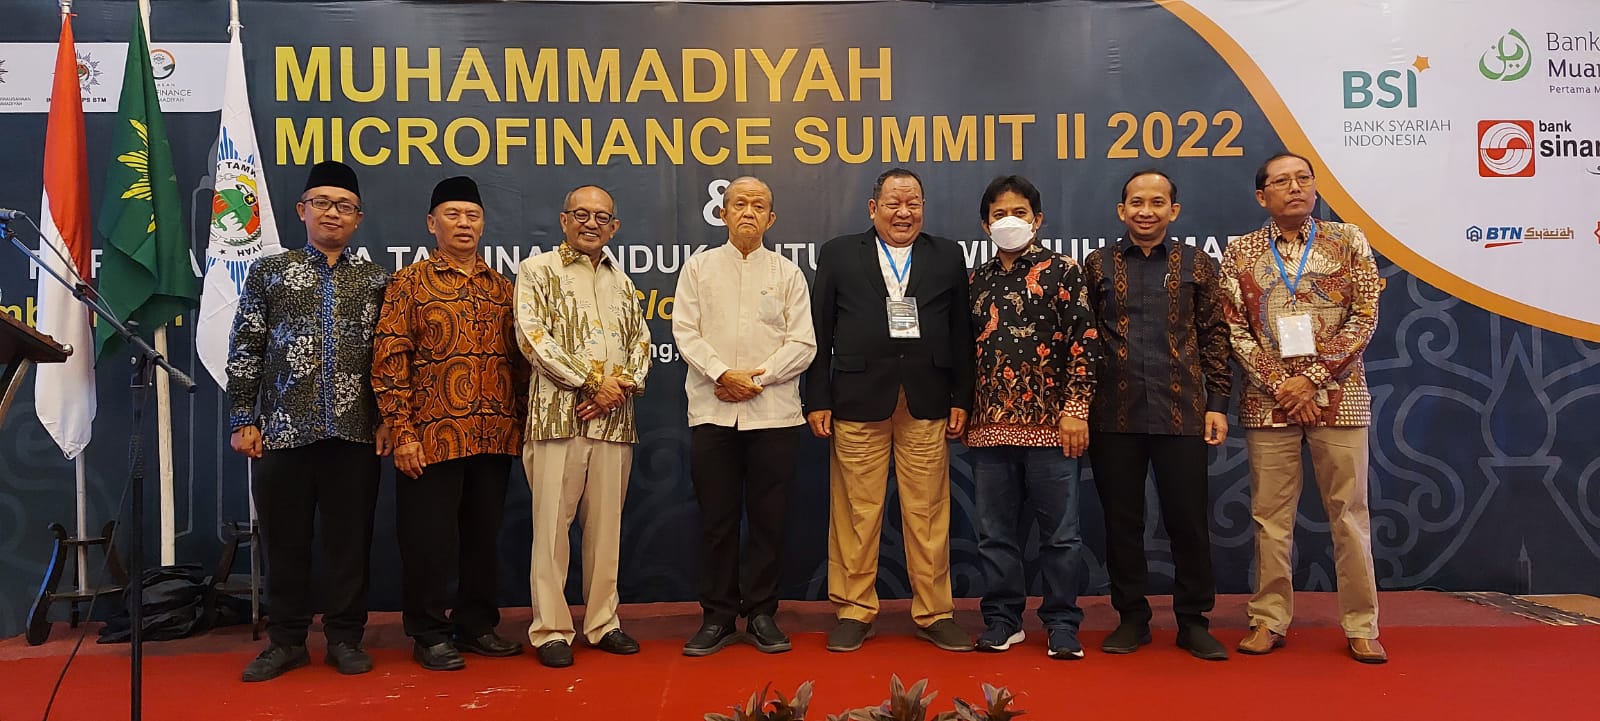 Konsolidasi dan Perkuat Pilar Ekonomi, Muhammadiyah Microfinance Summit II 2022 Resmi Digelar